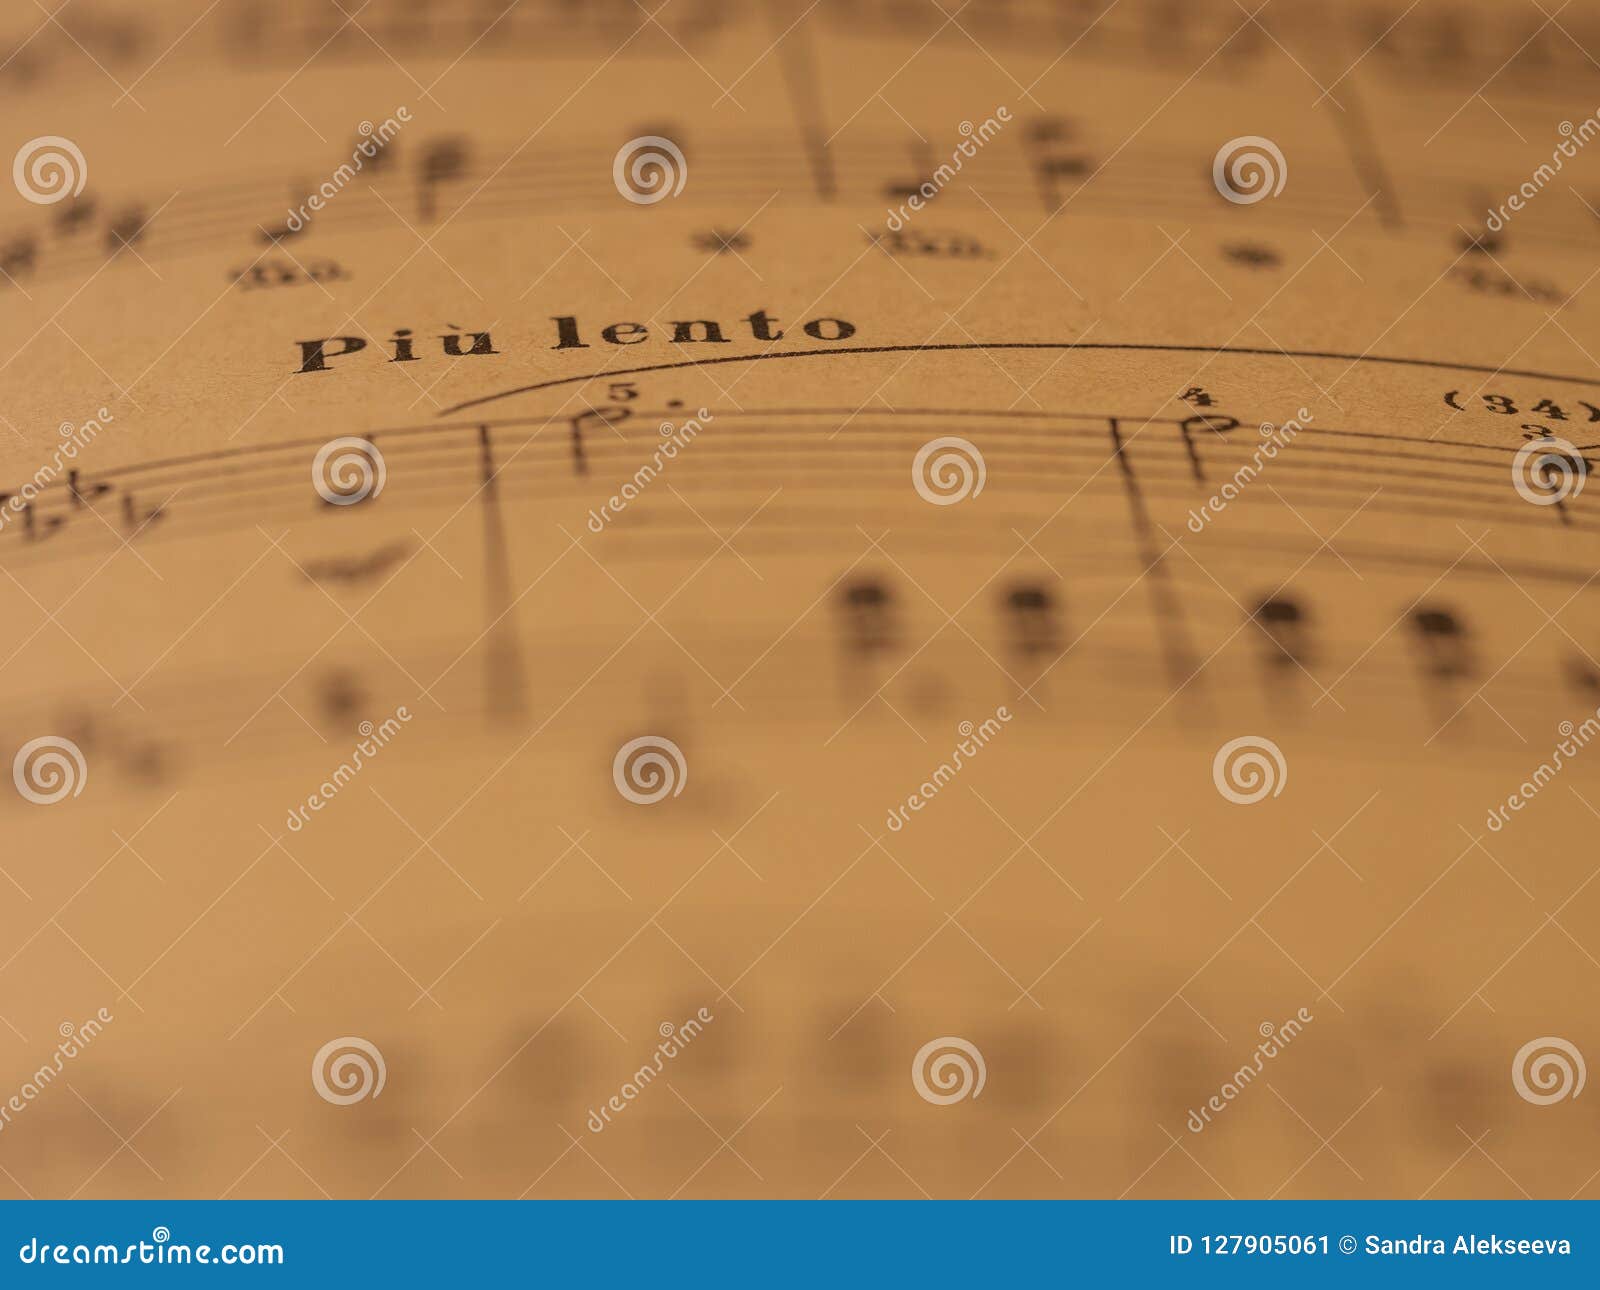 classical print piano score with piu lento mark